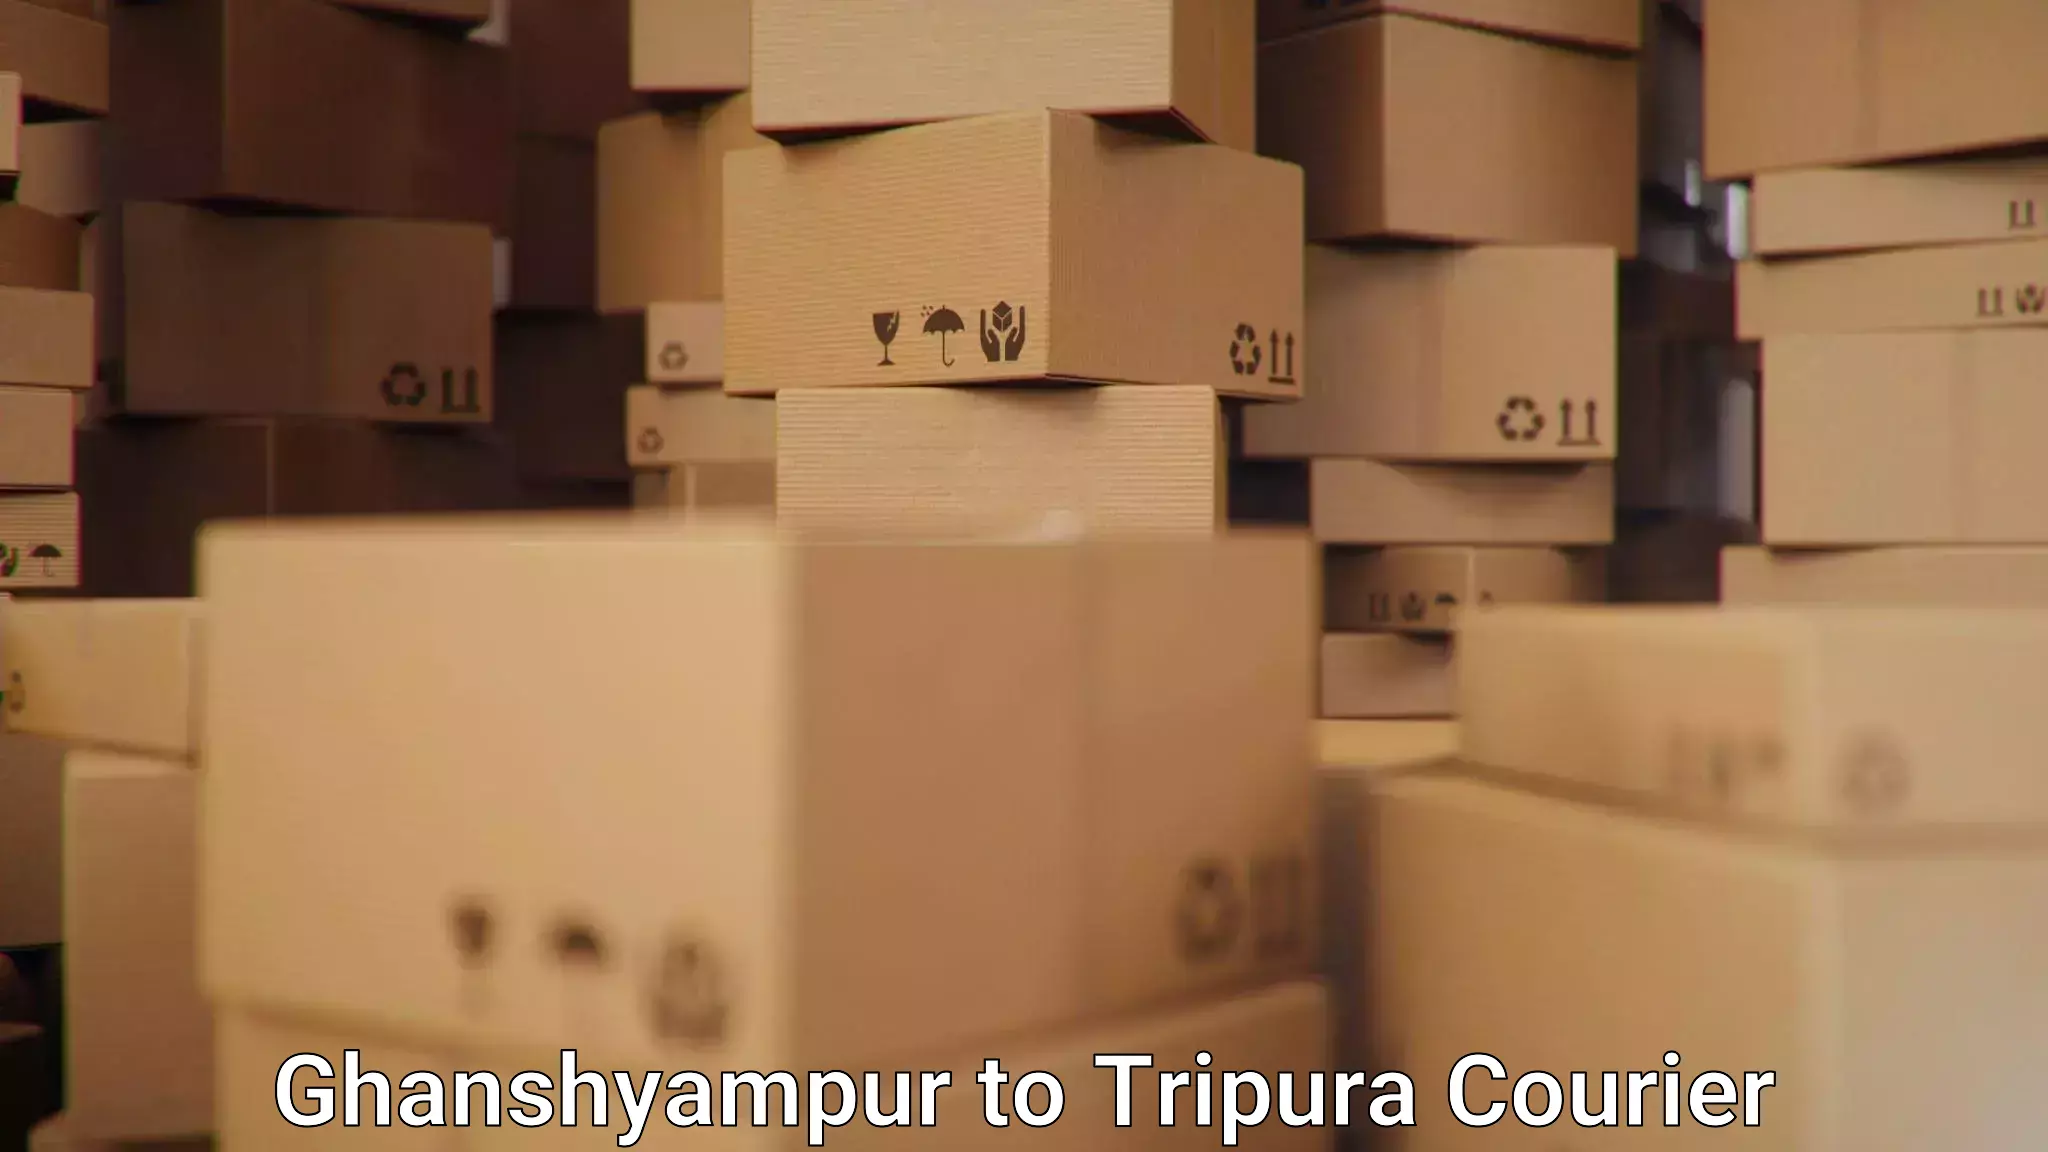 On-demand courier Ghanshyampur to Udaipur Tripura